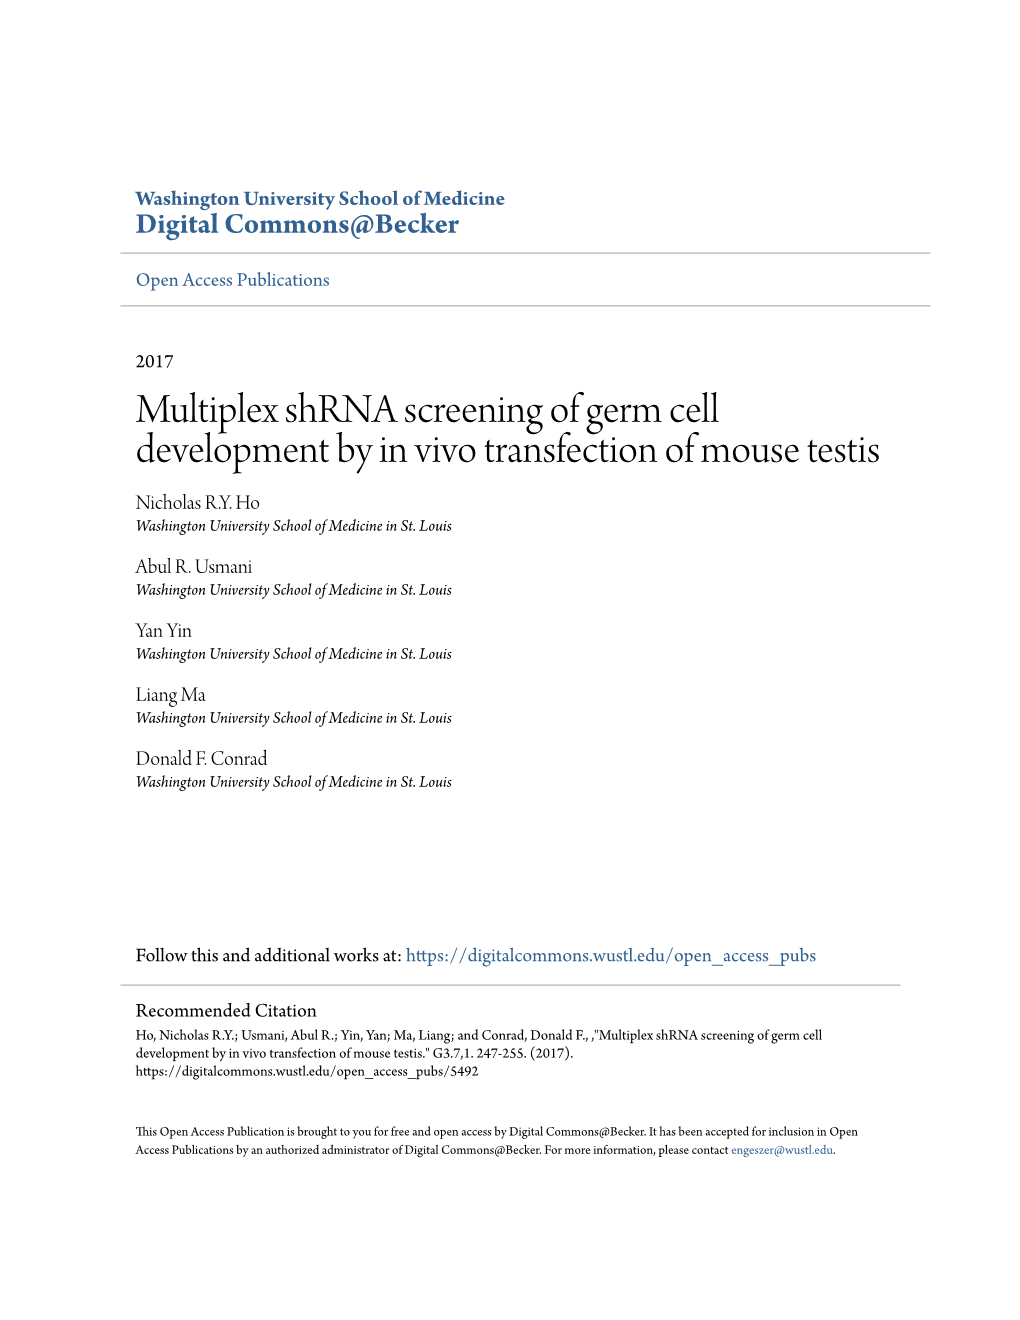 Multiplex Shrna Screening of Germ Cell Development by in Vivo Transfection of Mouse Testis Nicholas R.Y